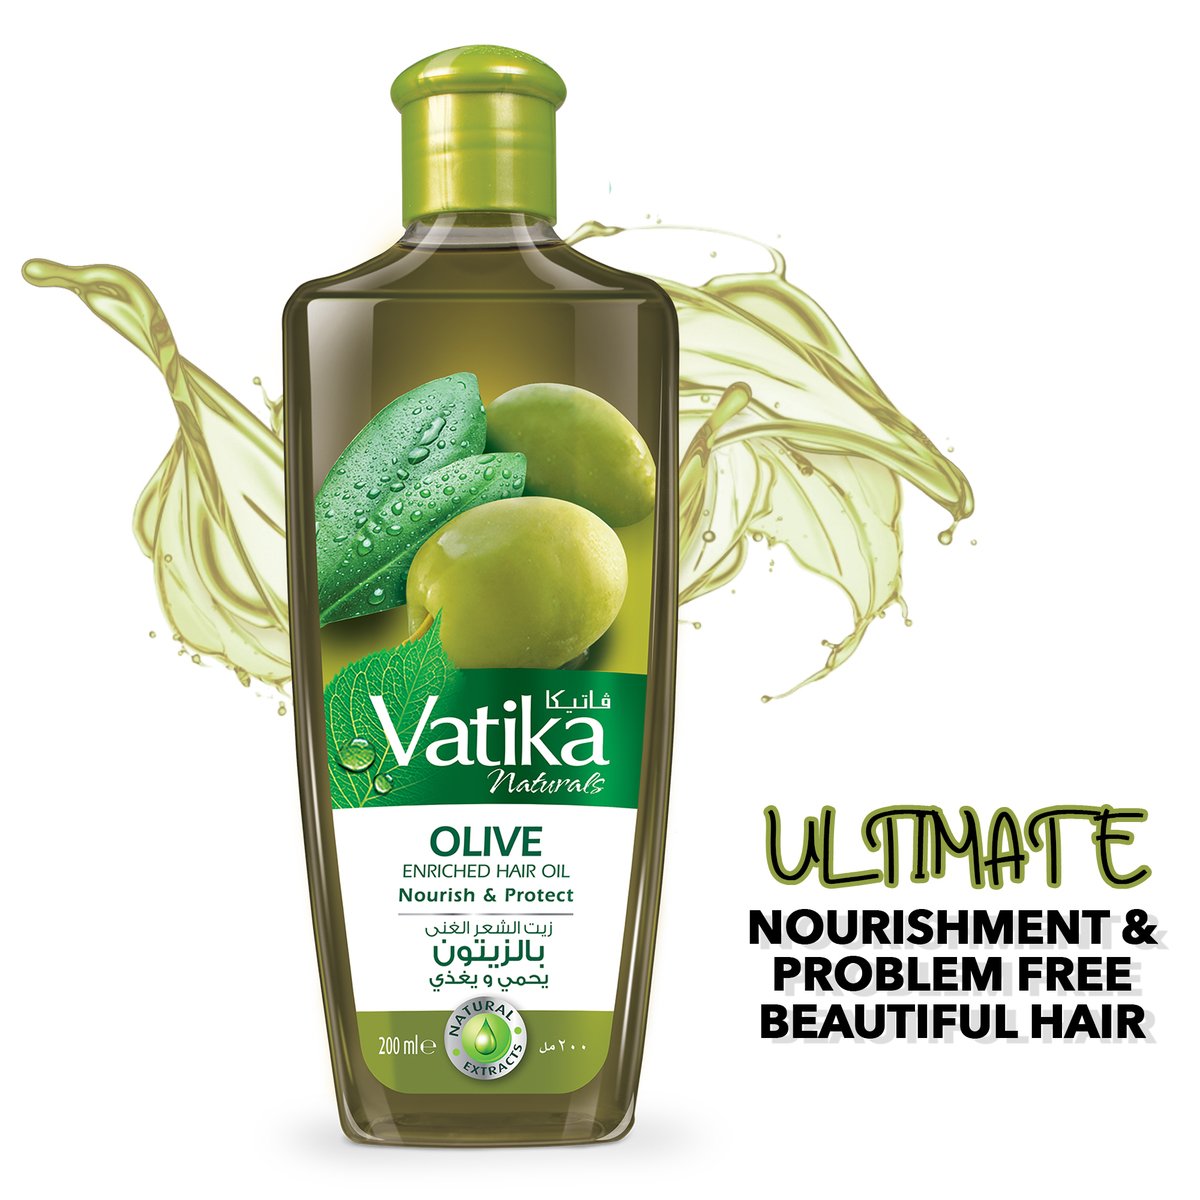 Vatika Naturals Olive Enriched Hair Oil Nourish & Protect 200 ml